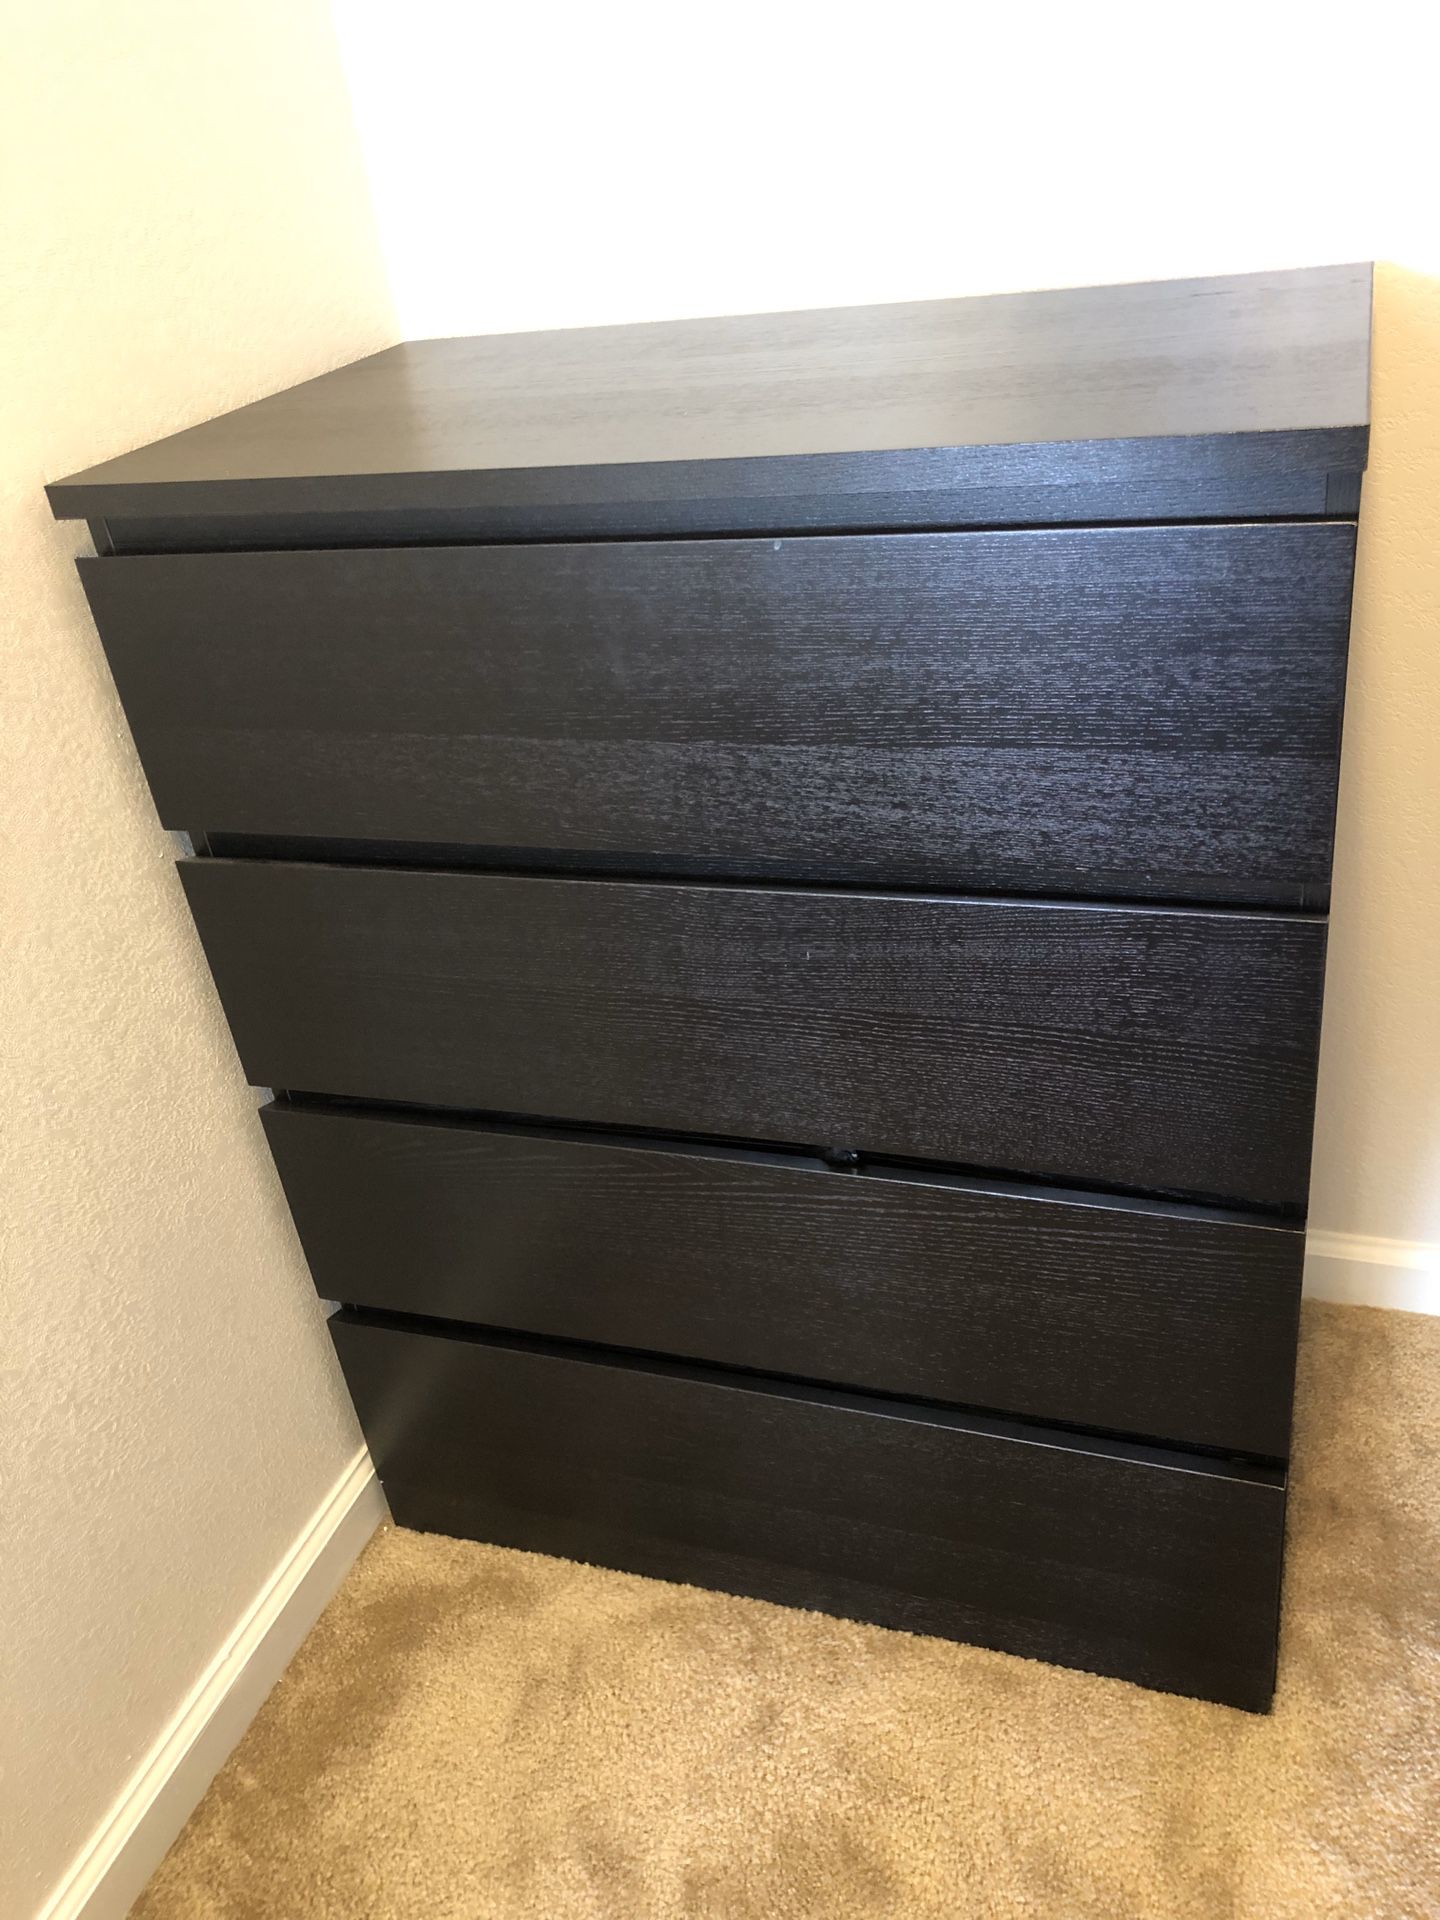 IKEA “MALM” 4 drawer dresser